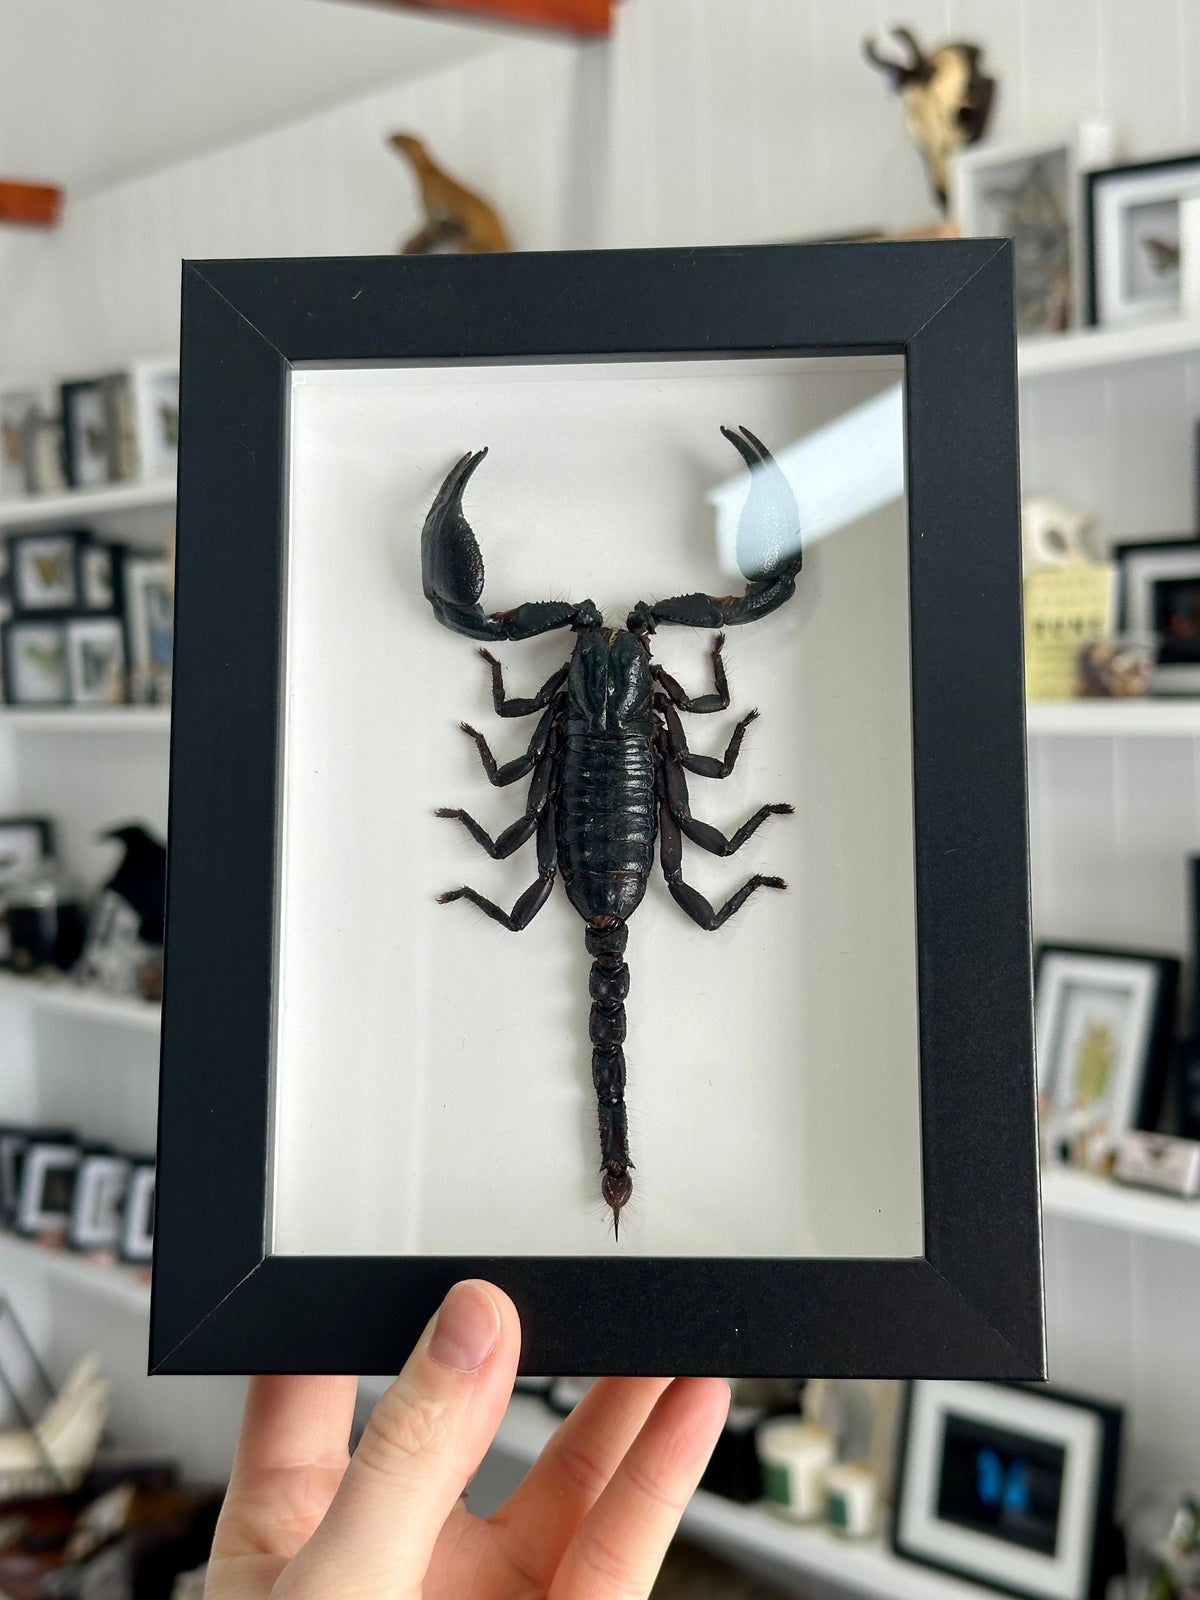 Heterometreus Spinifer Scorpion in a frame